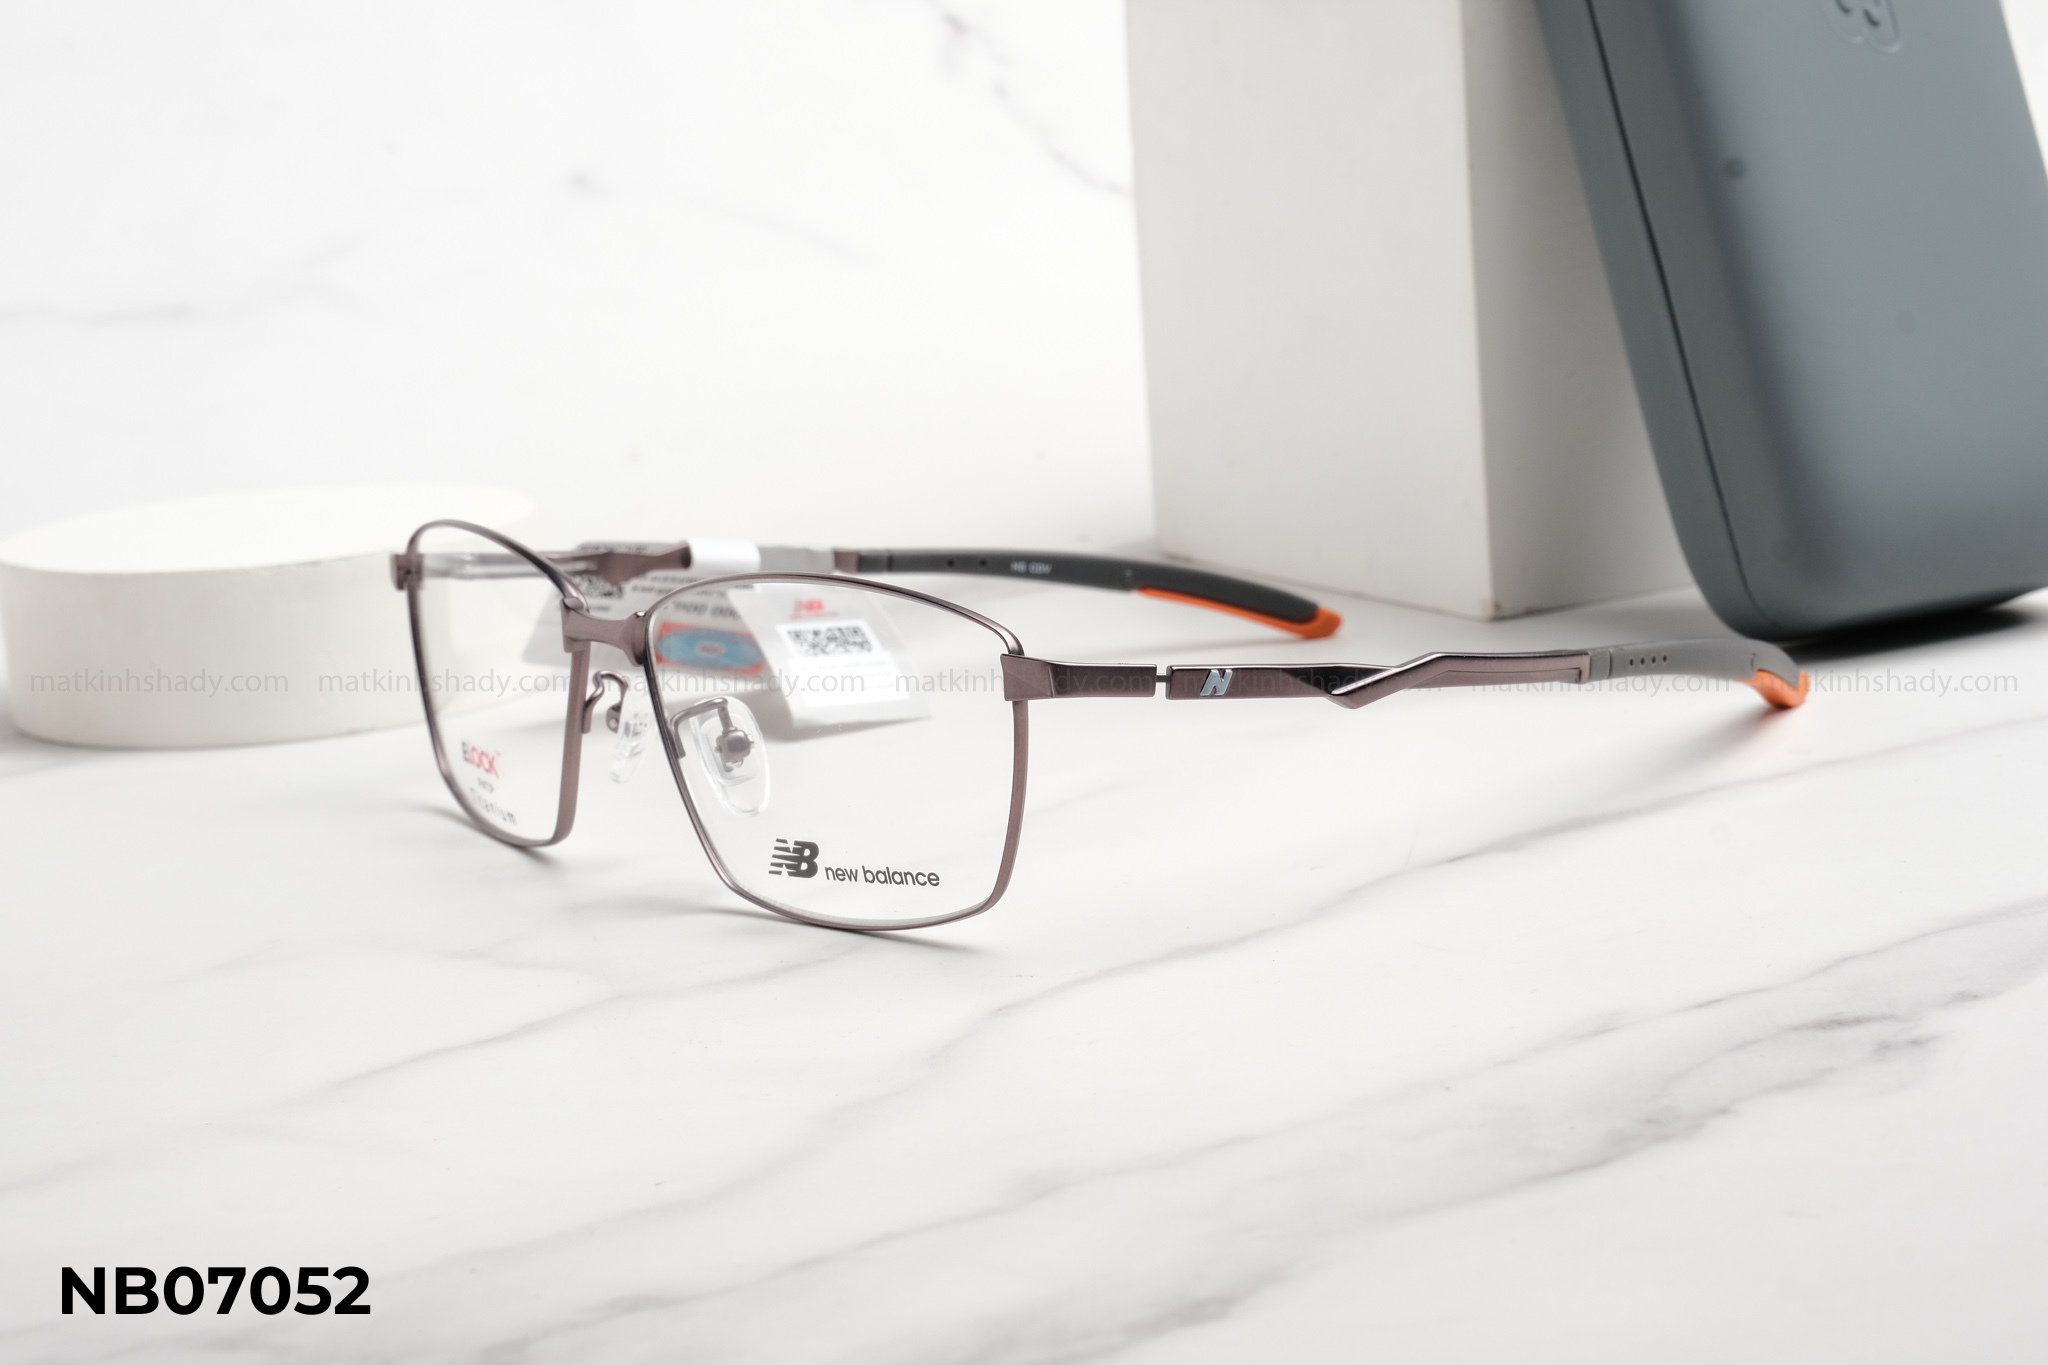  New Balance Eyewear - Glasses - NB07052 